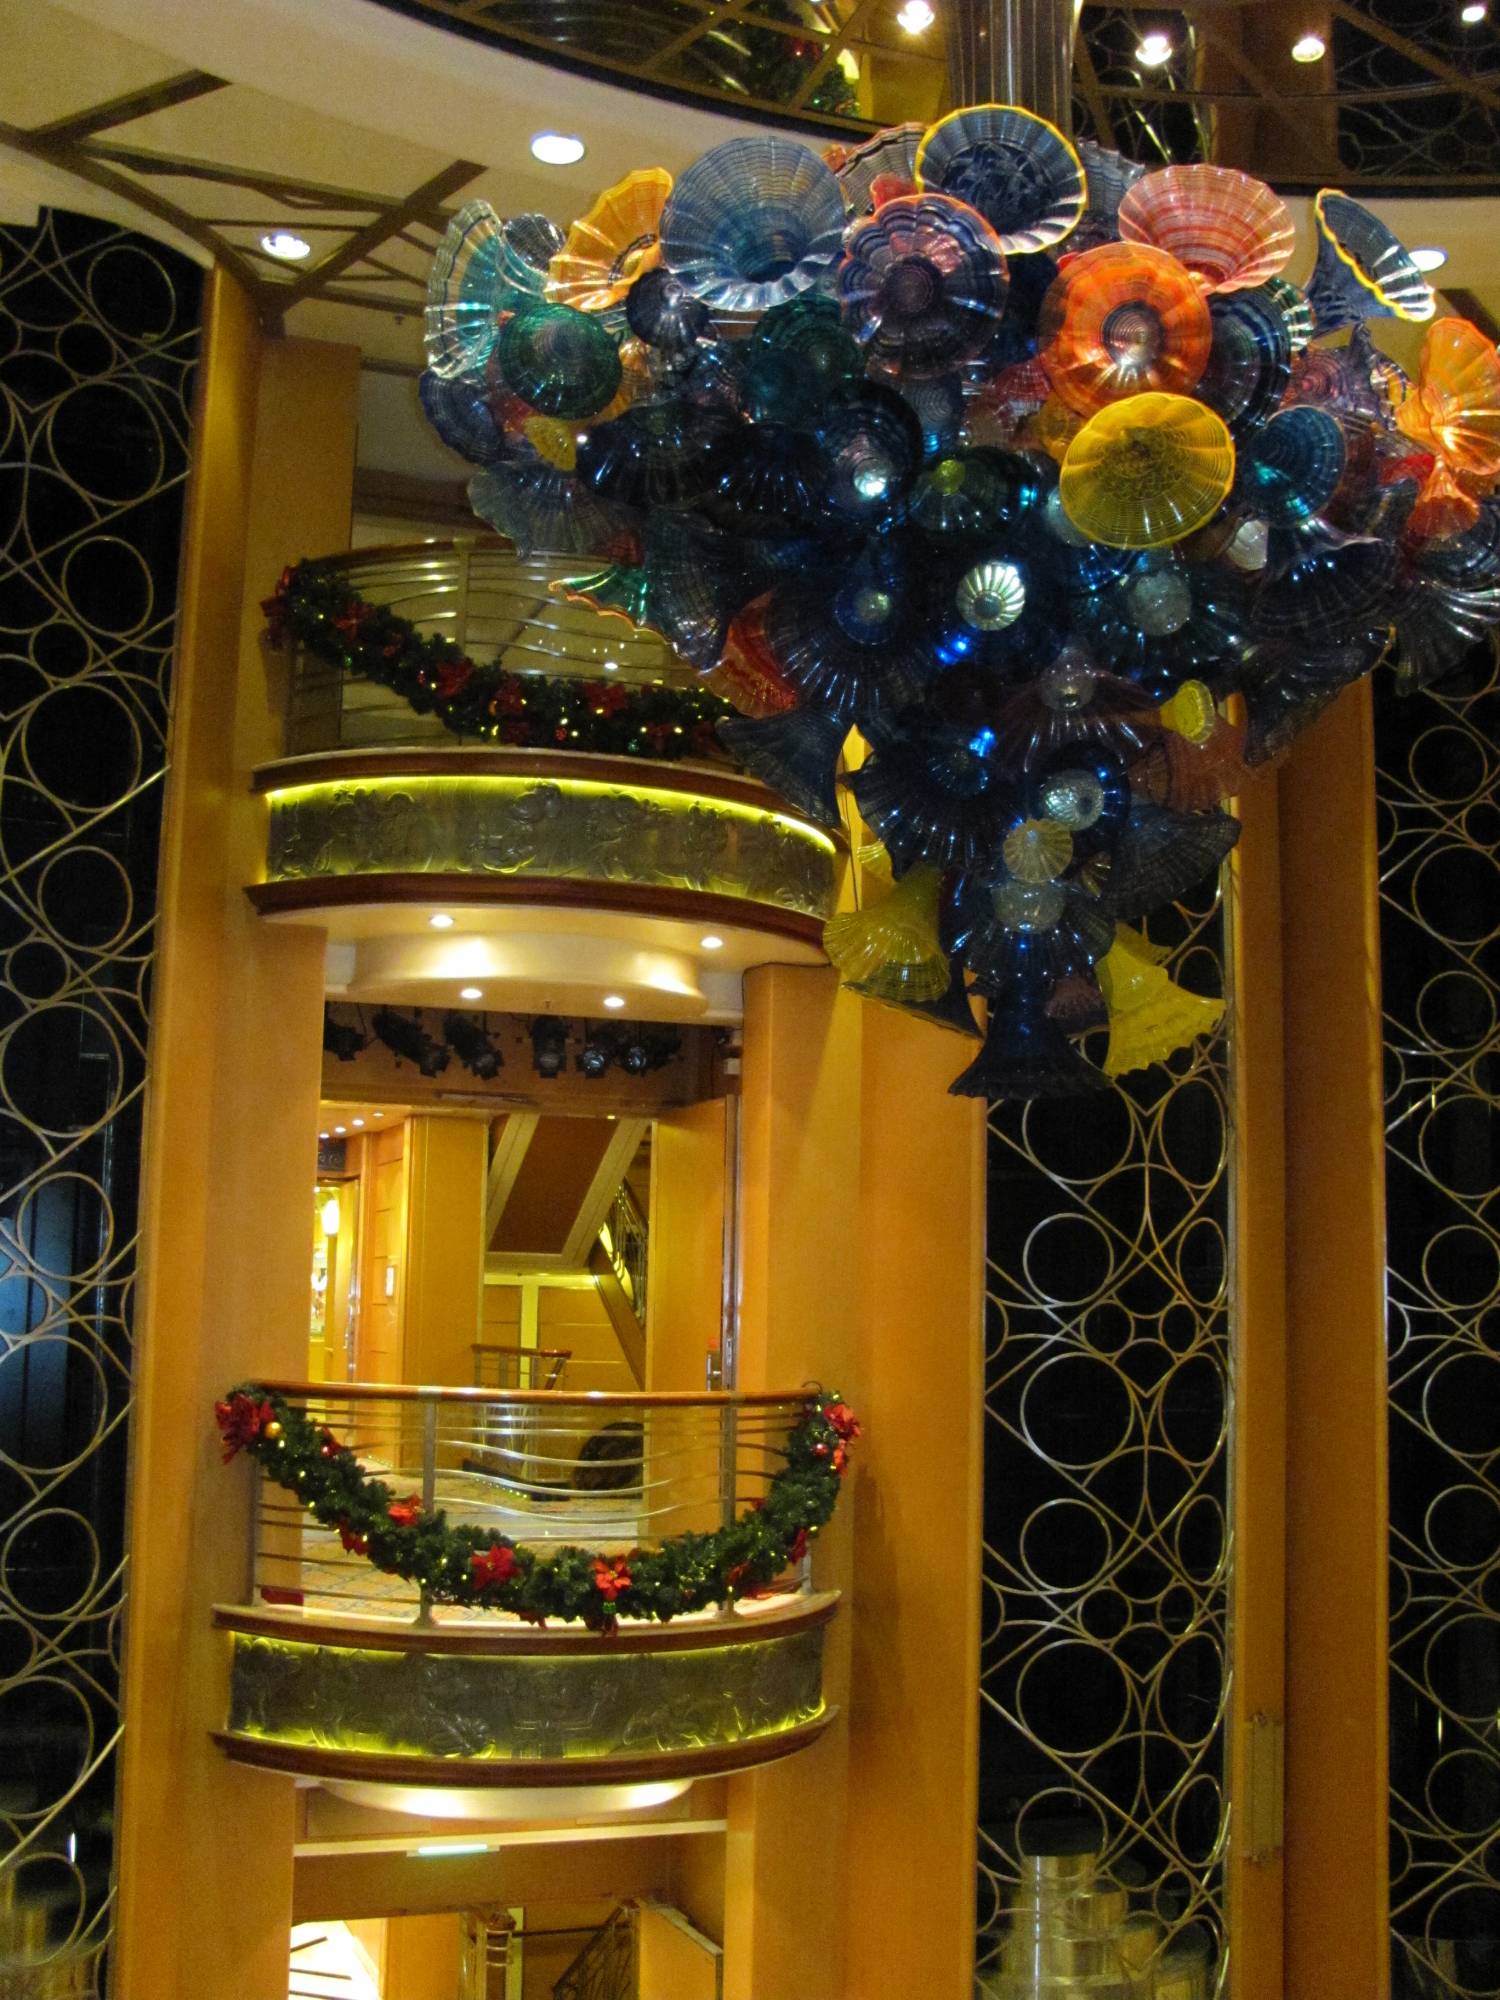 Lobby of the Disney Magic